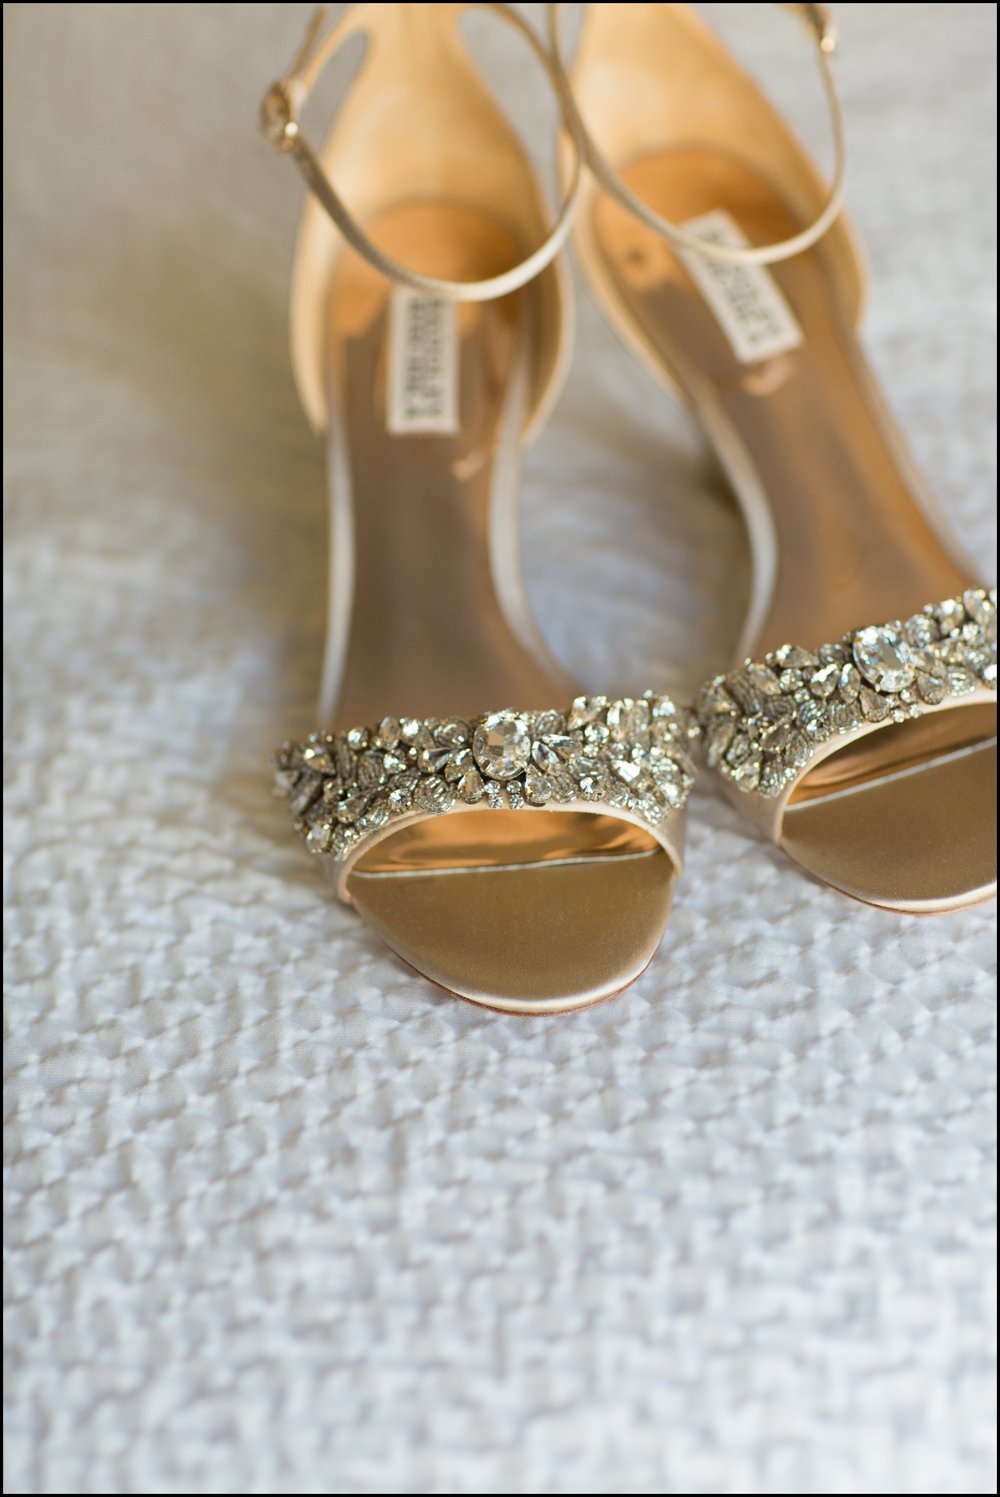  Wedding shoes 